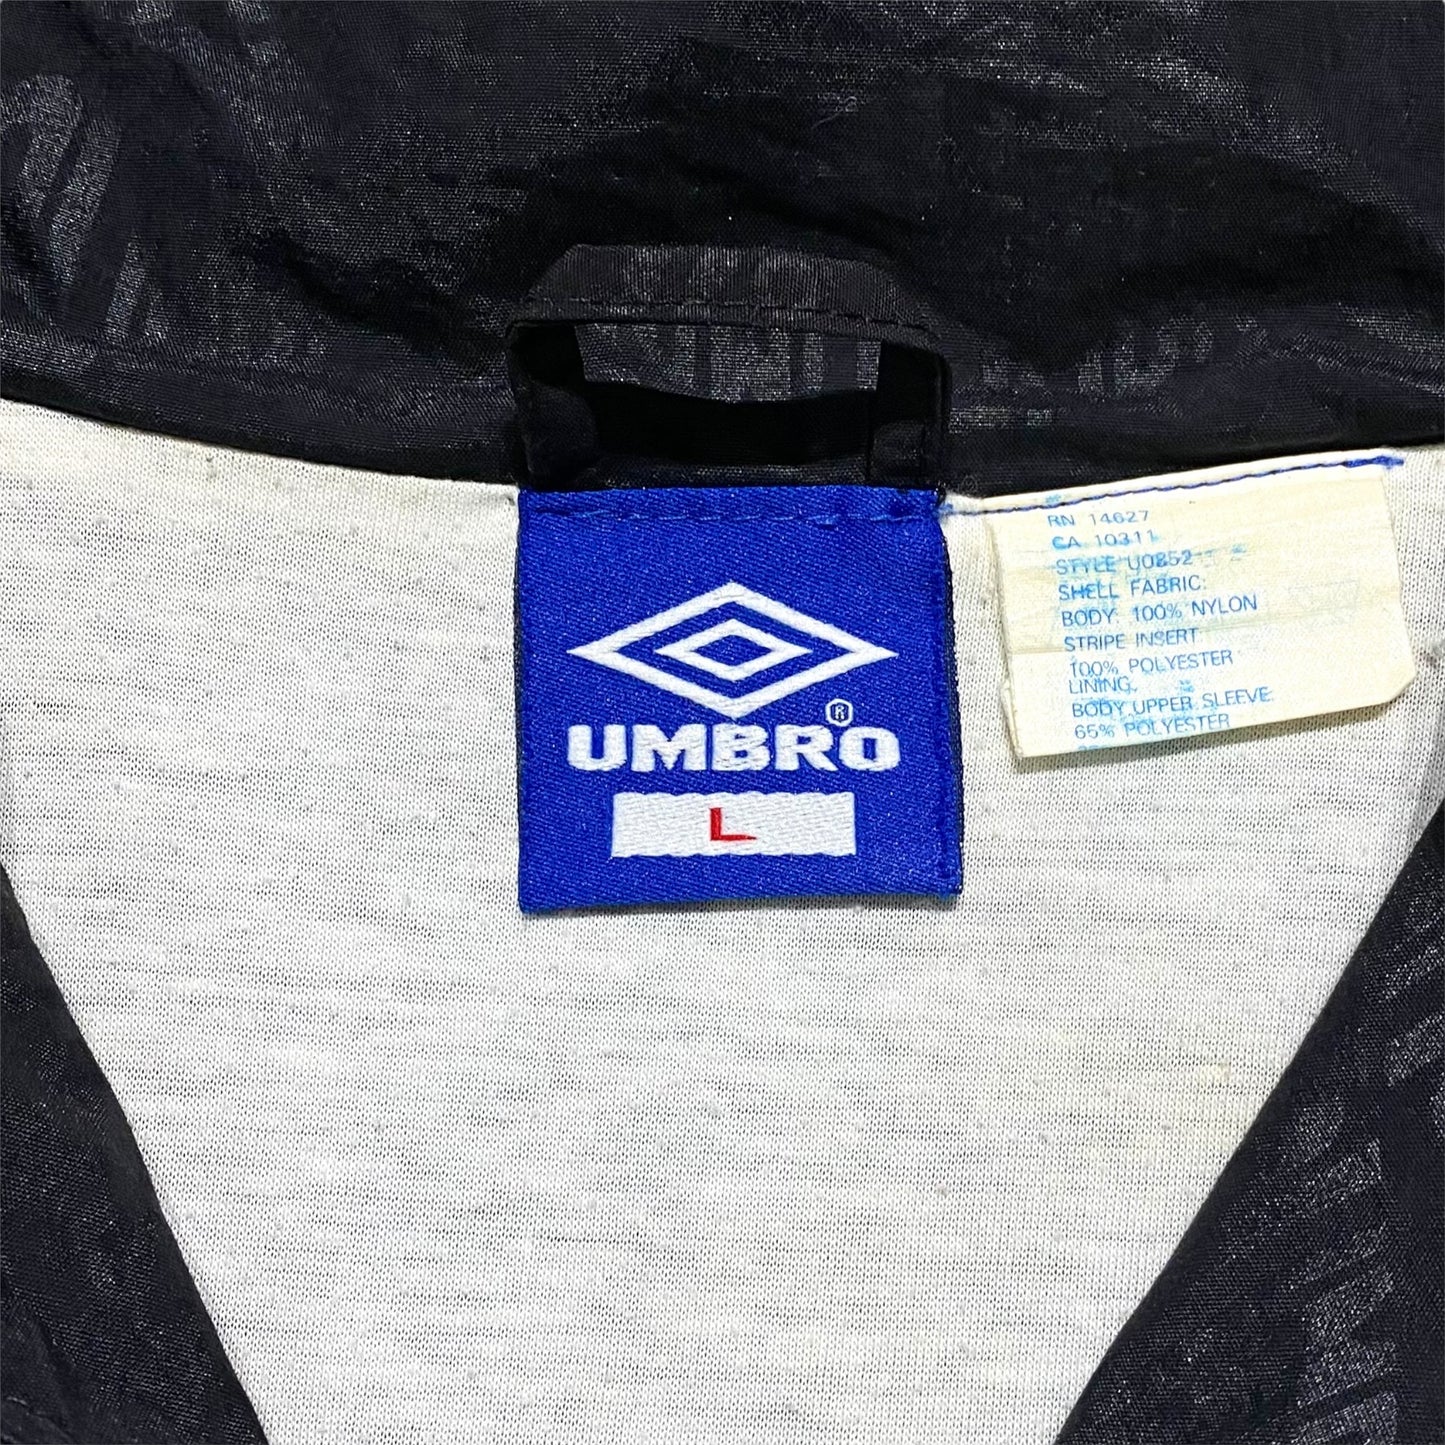 90's "umbro" Nylon jacket